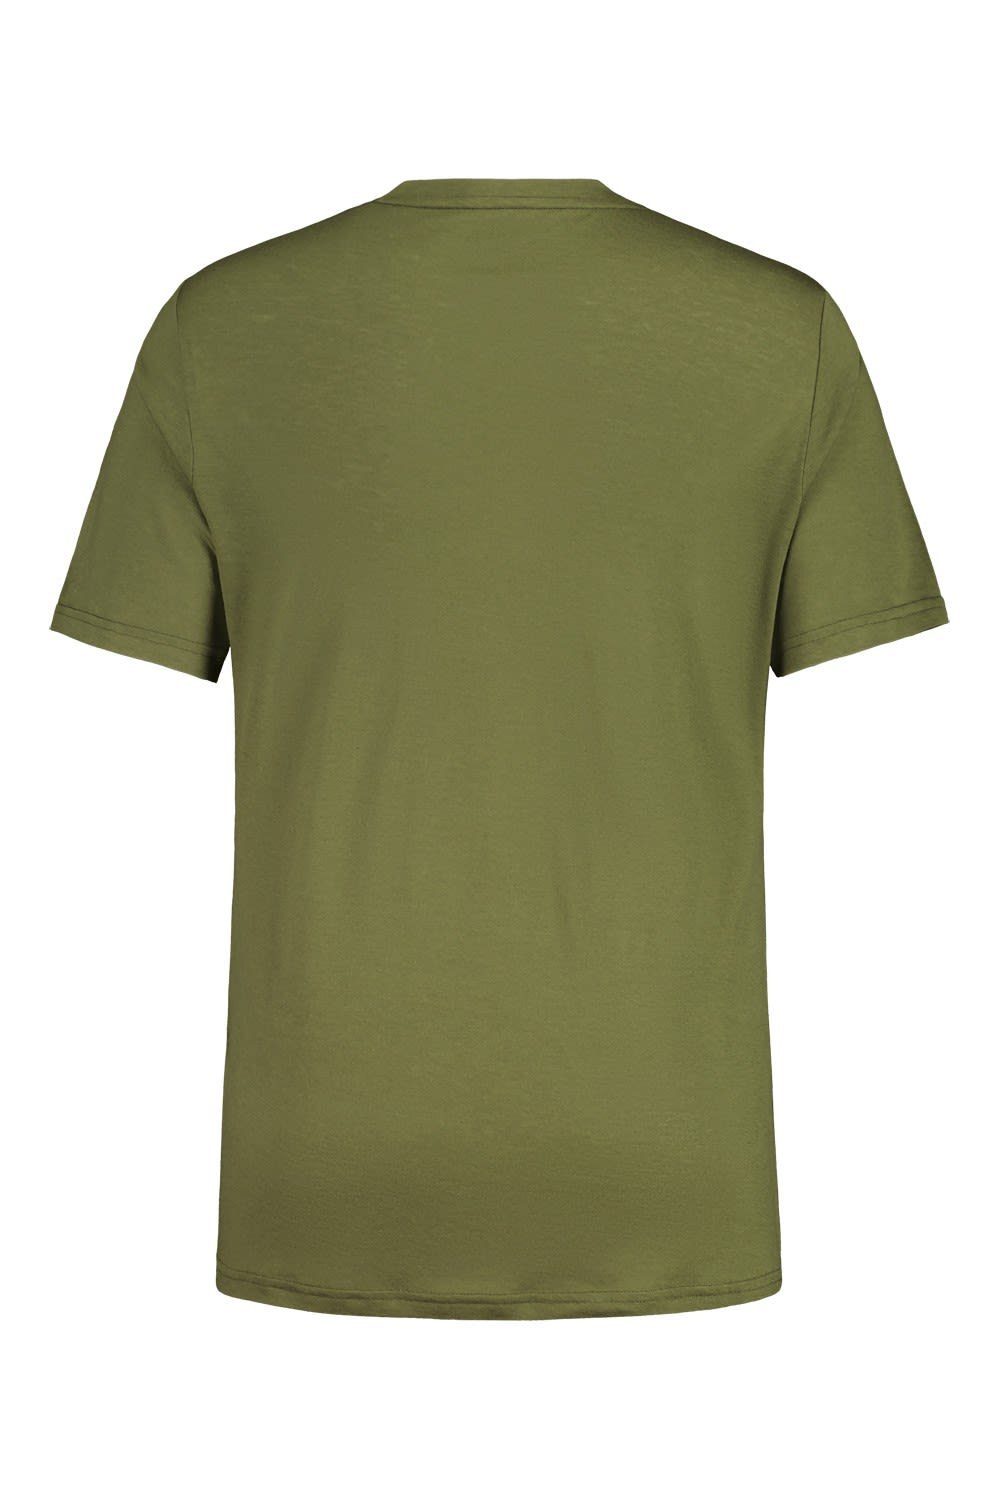 Maloja T-Shirt Maloja M Brown T-shirt Roccam. Herren Kurzarm-Shirt